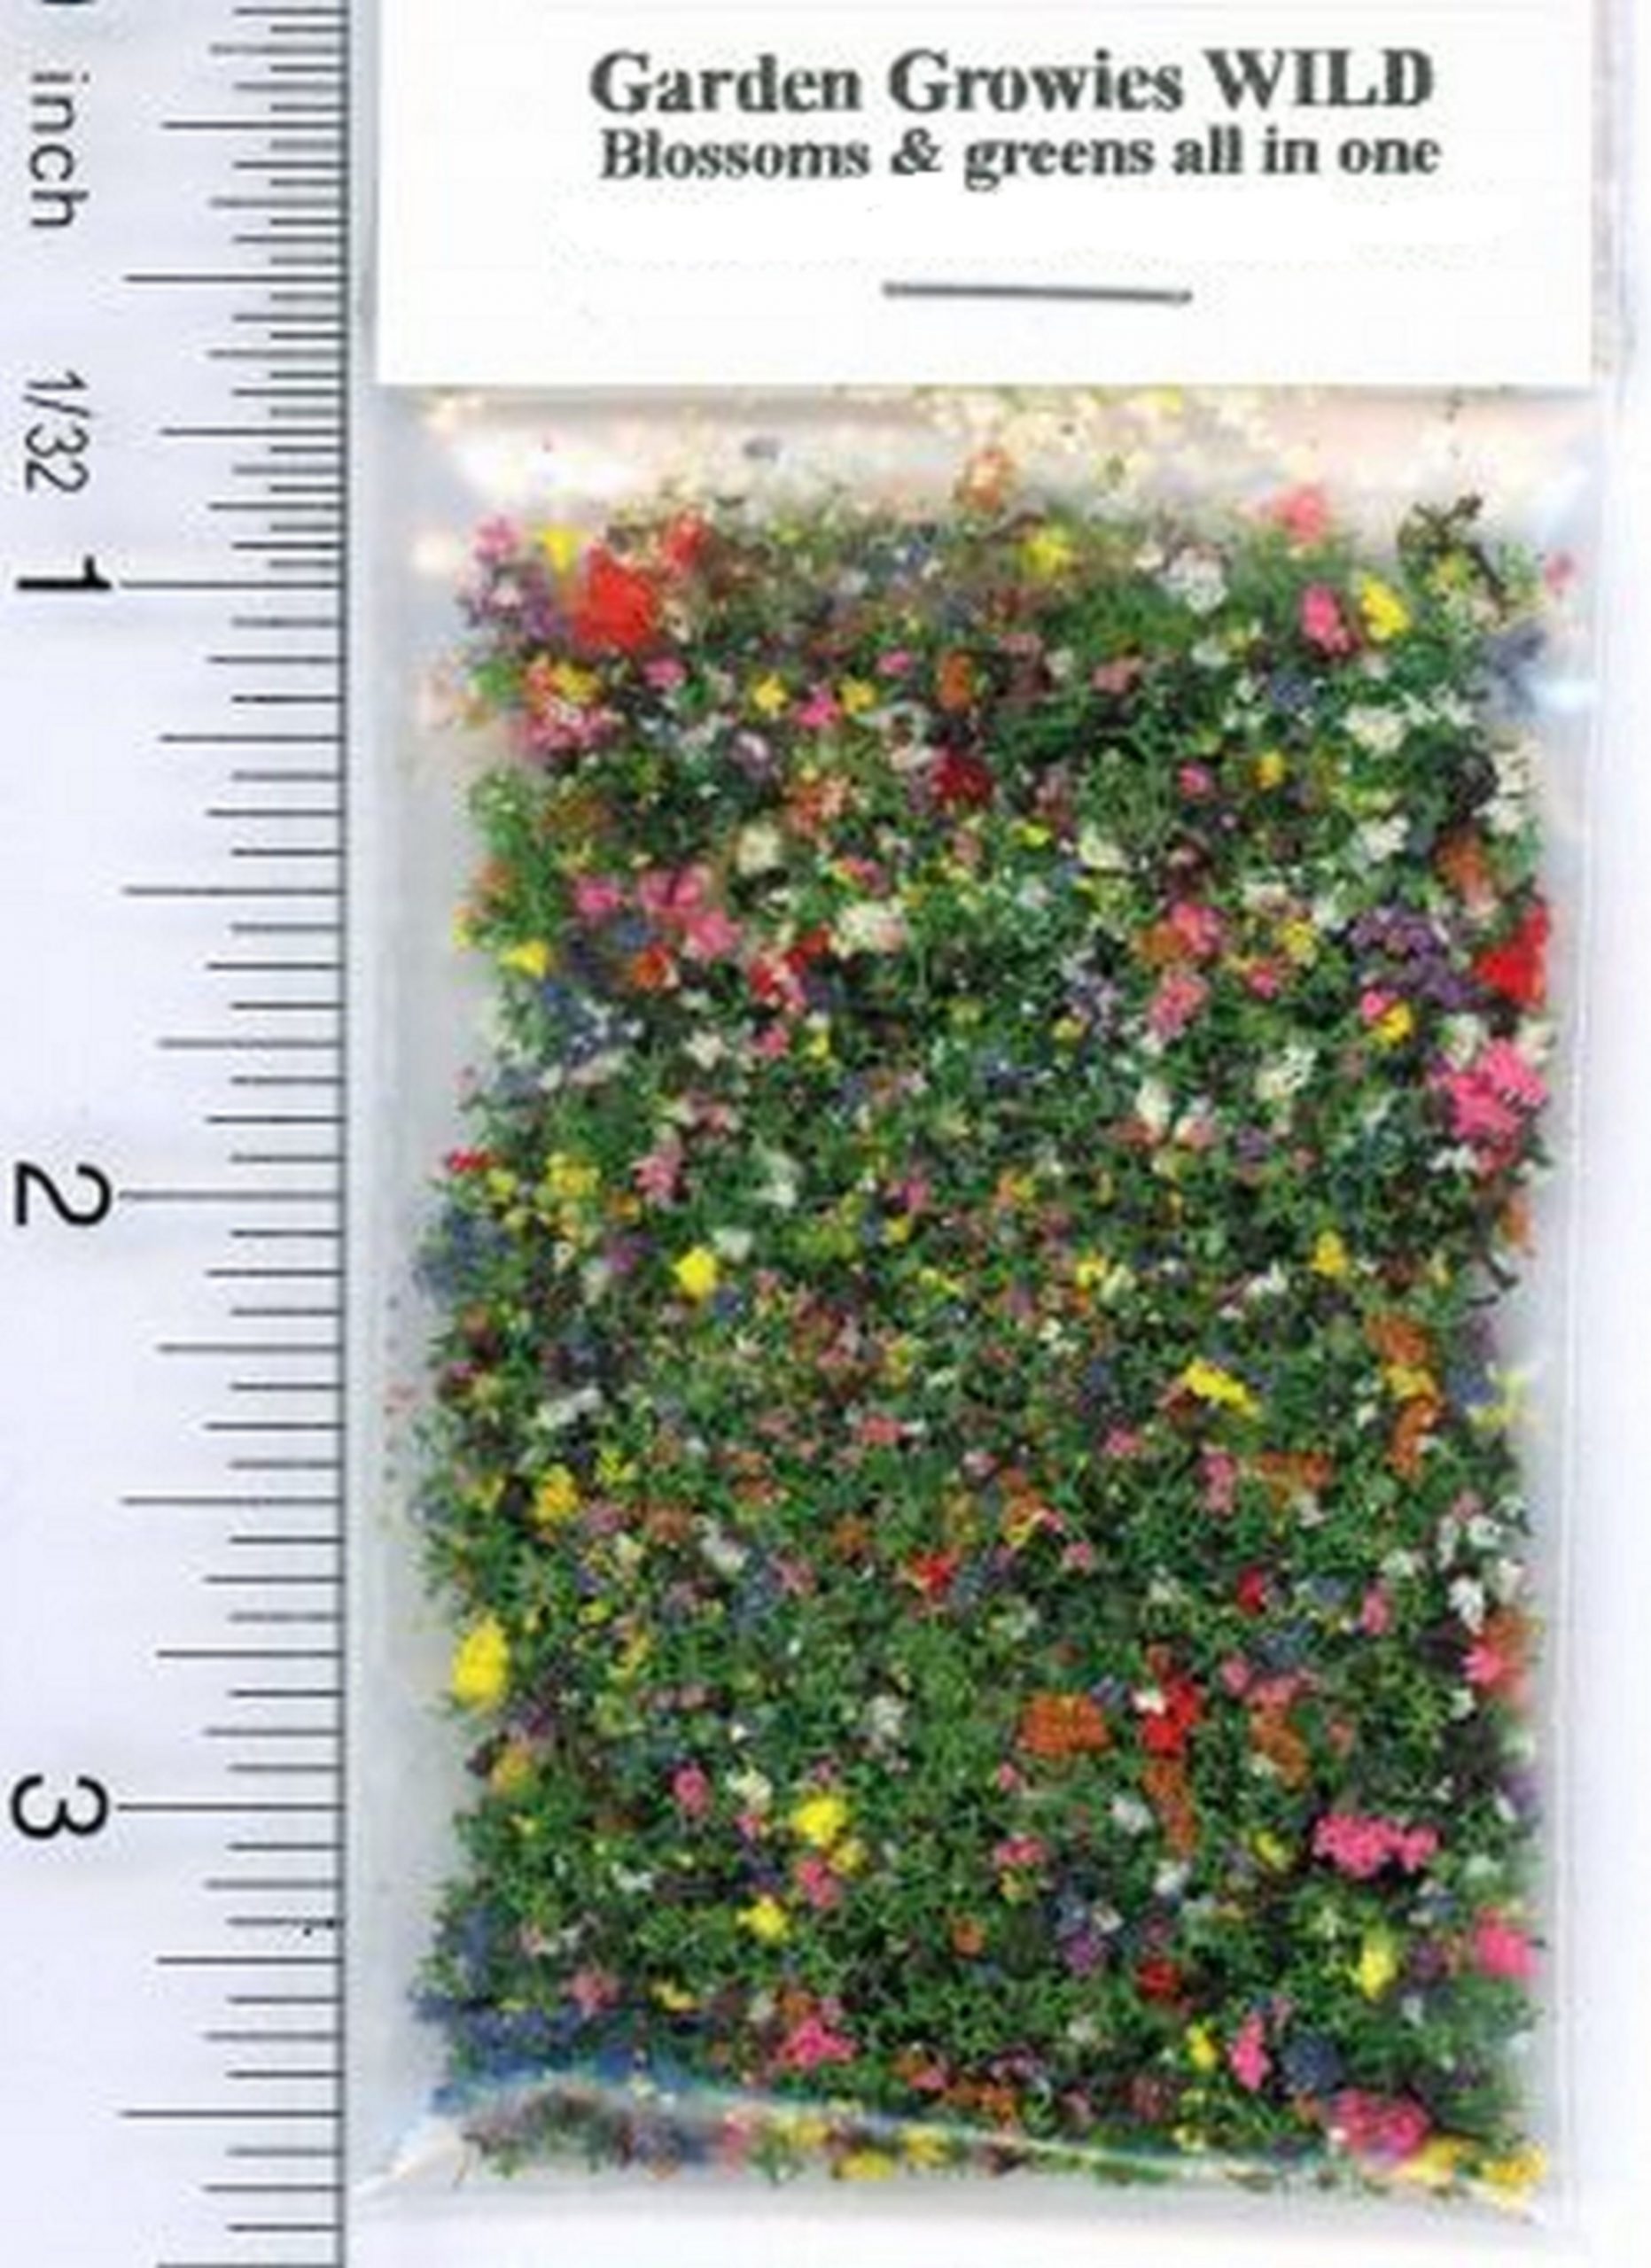 Dollhouse Miniature Wild Blossom Garden Growies by Model Builders Supply